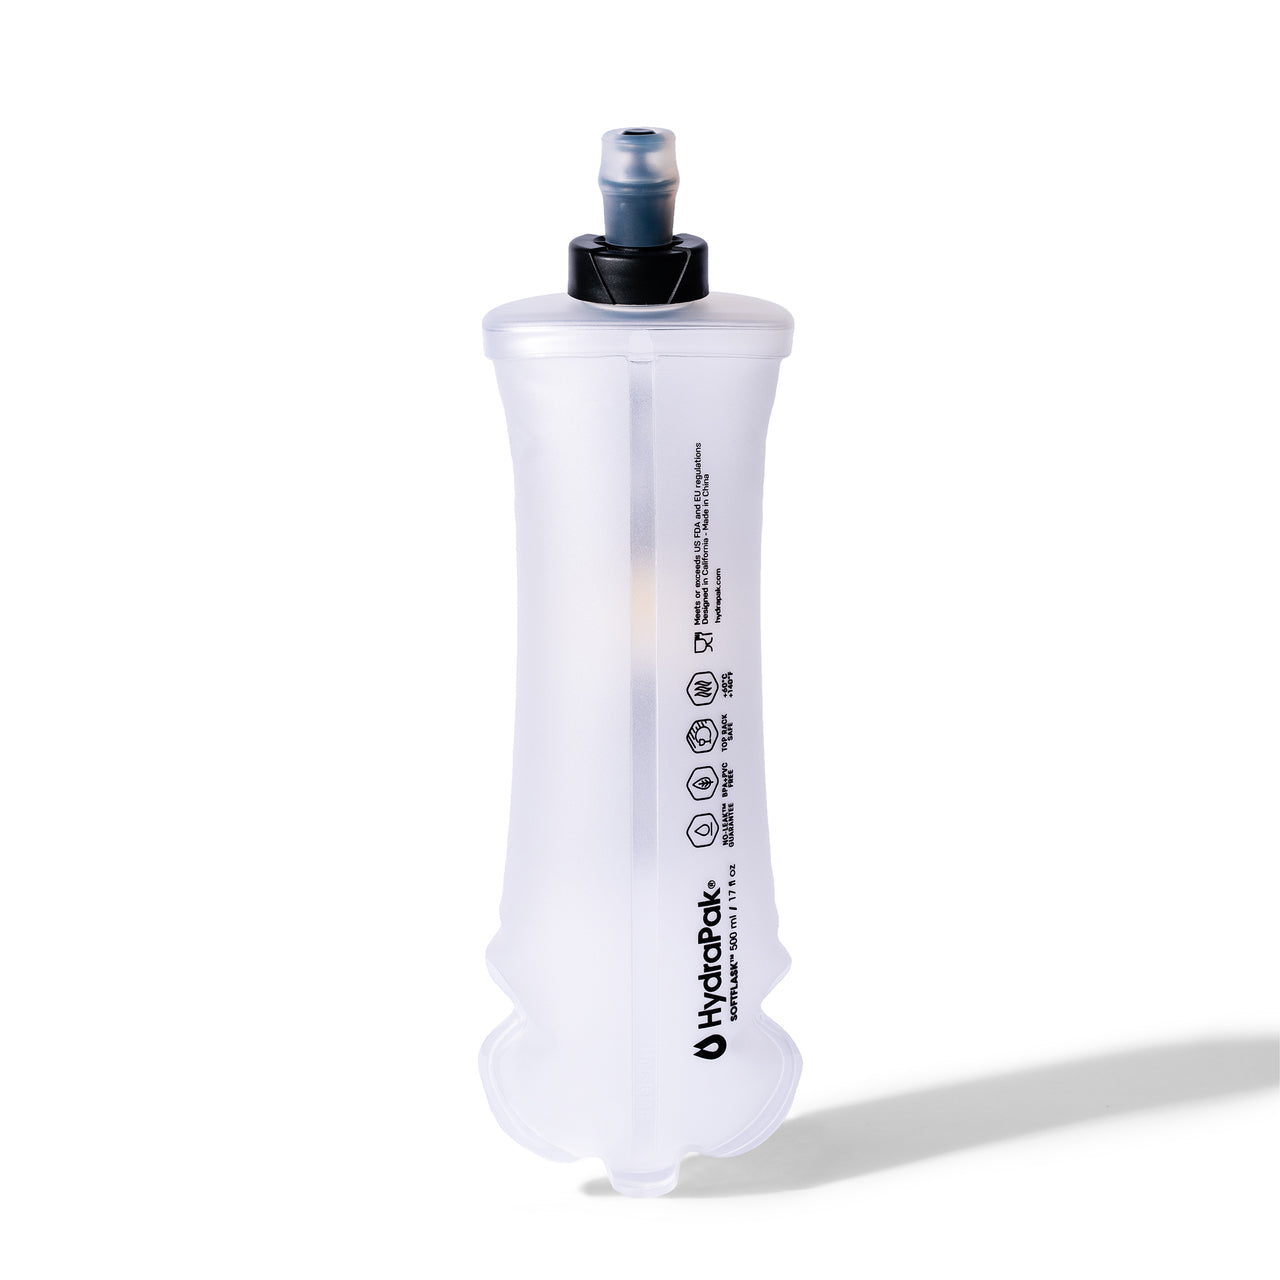 Soft Flask 500ml, Translucent